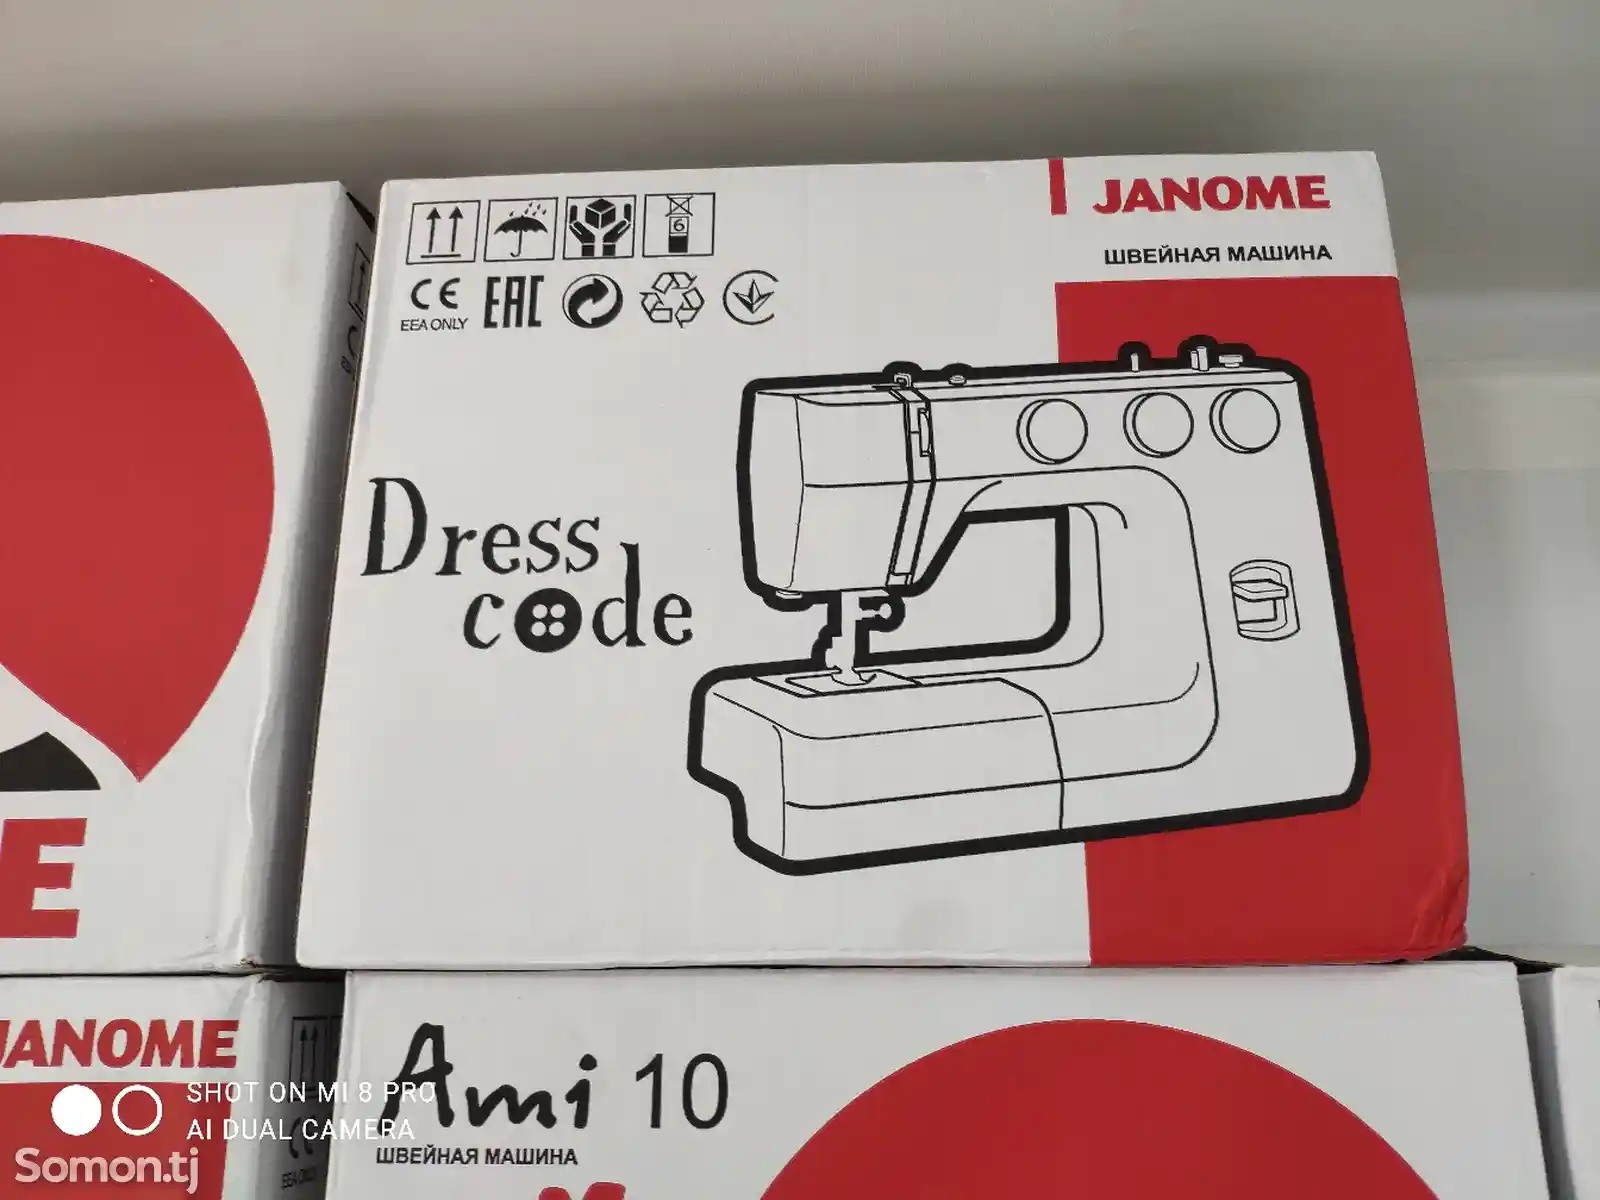 Швейная машина Janome Dress code-4